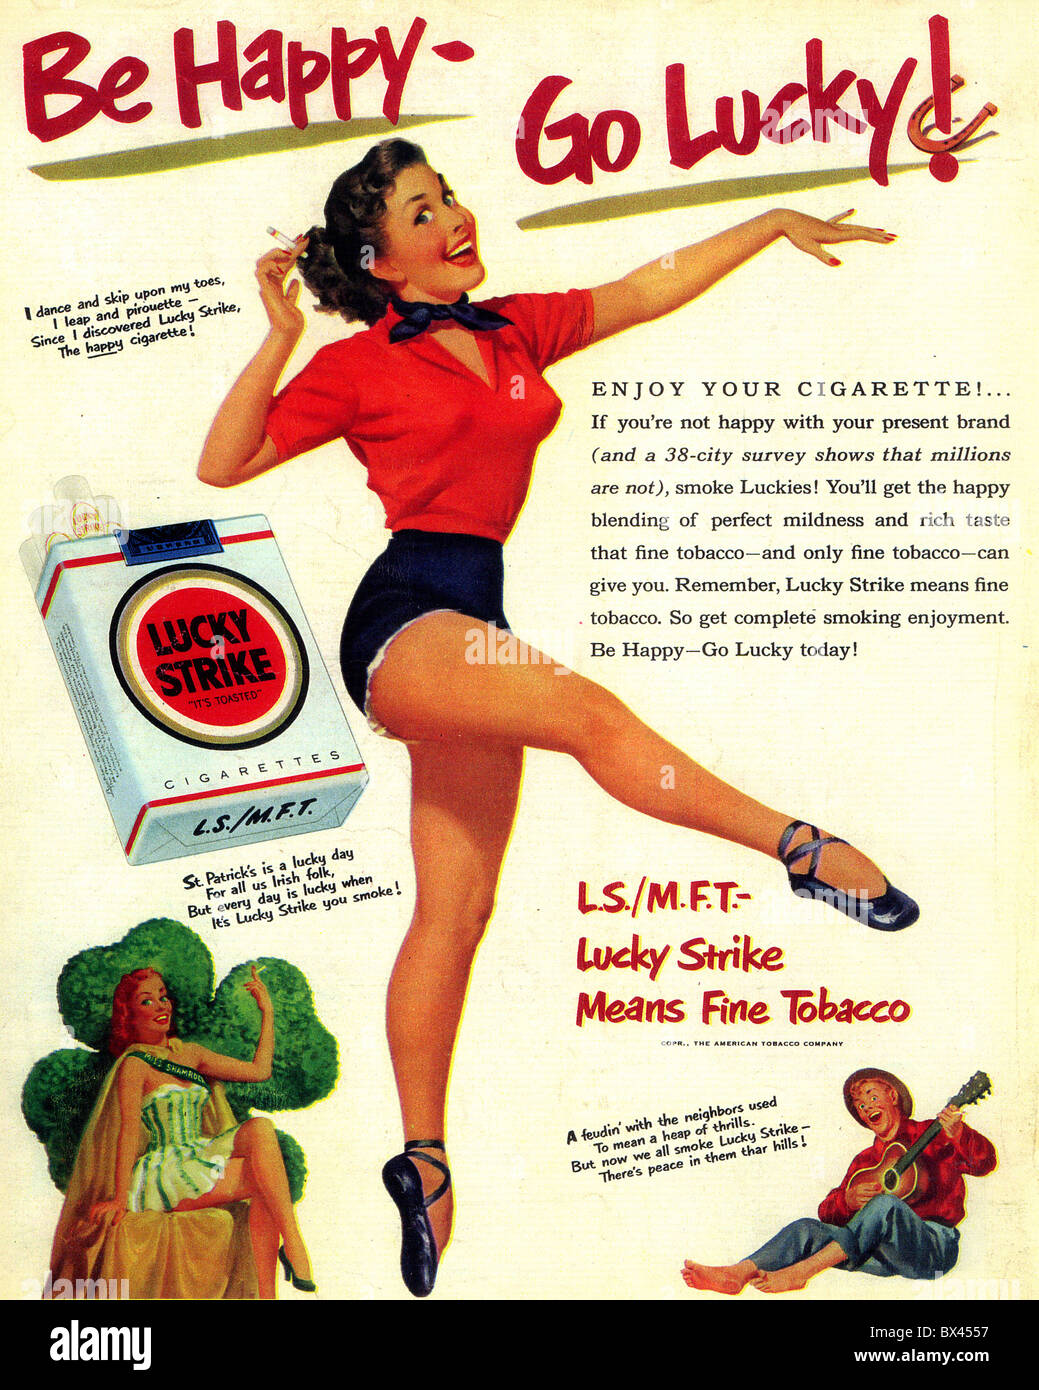 LUCKY STRIKE ADVERT 1951 Stock Photo